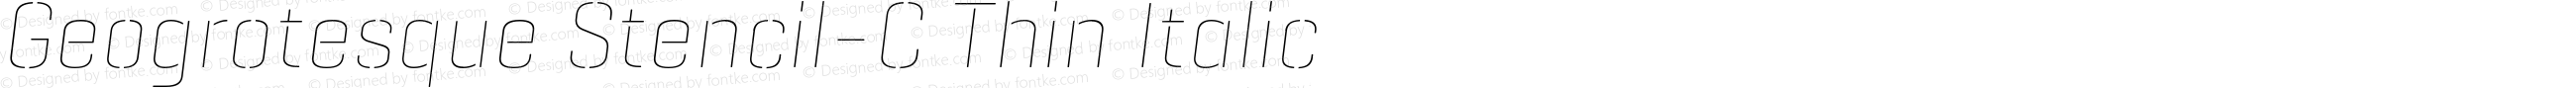 Geogrotesque Stencil-C Thin Italic